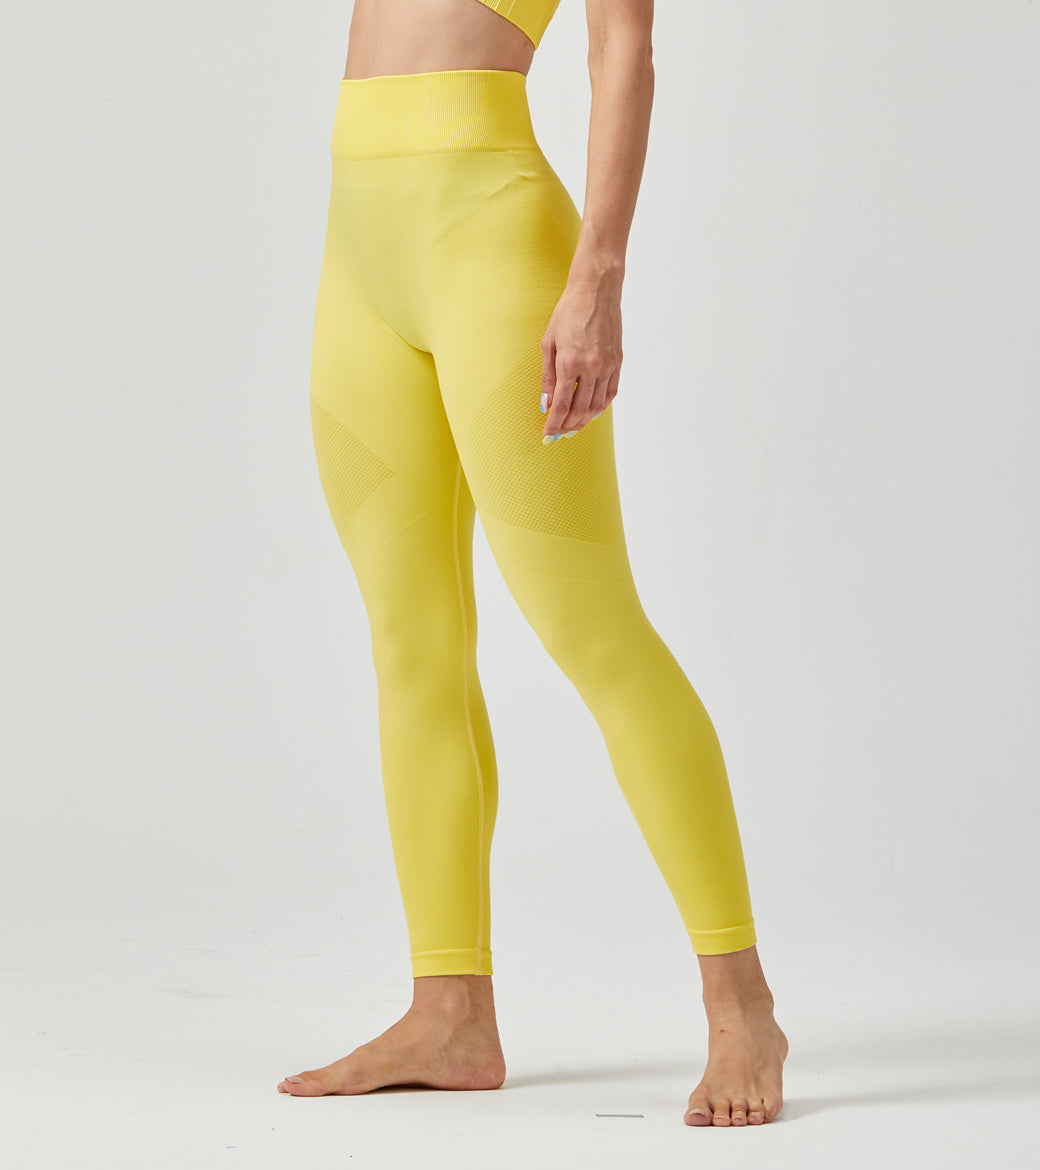 LOVESOFT Yellow Seamless Leggings for Women Yoga Workout Tight Pants